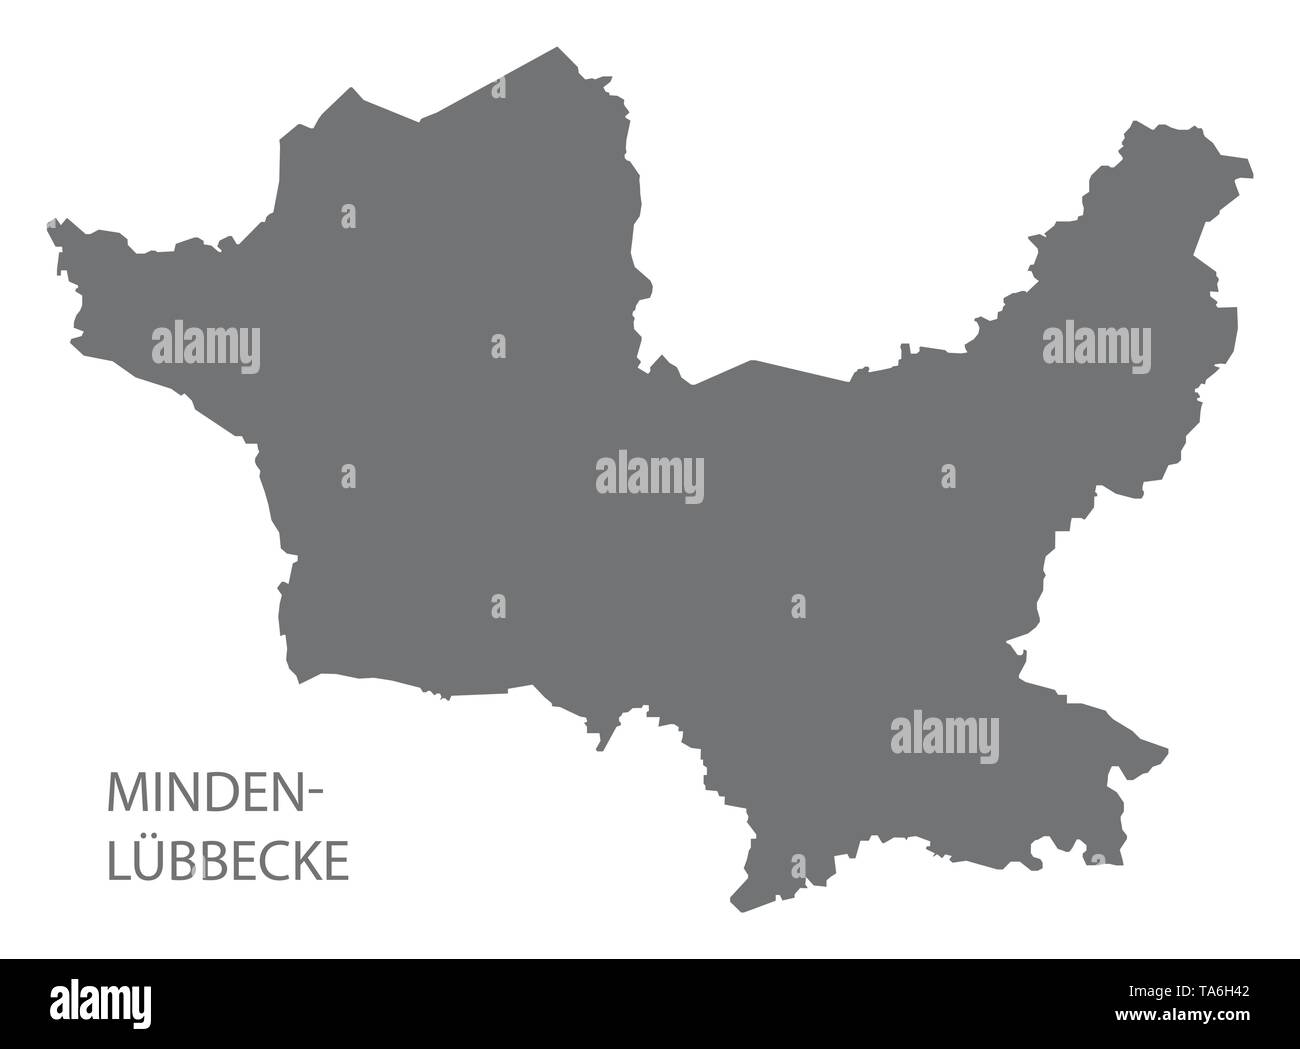 Minden-Luebbecke grey county map of North Rhine-Westphalia DE Stock Vector